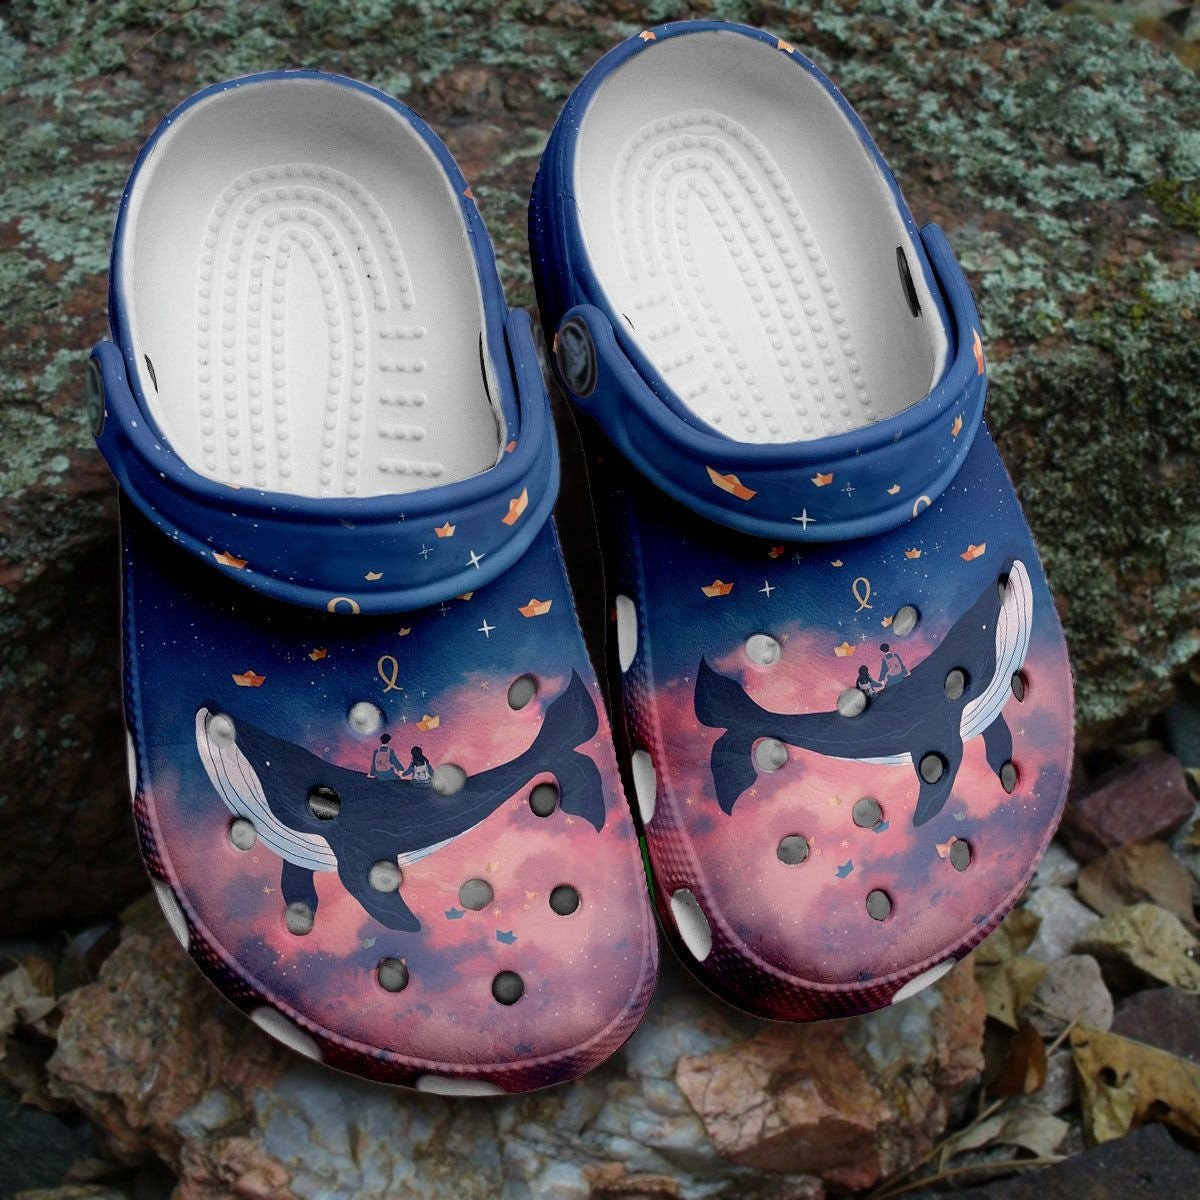 Cutie Couple On Whale Shoes - Love The Ocean Shoes Crocbland Clog